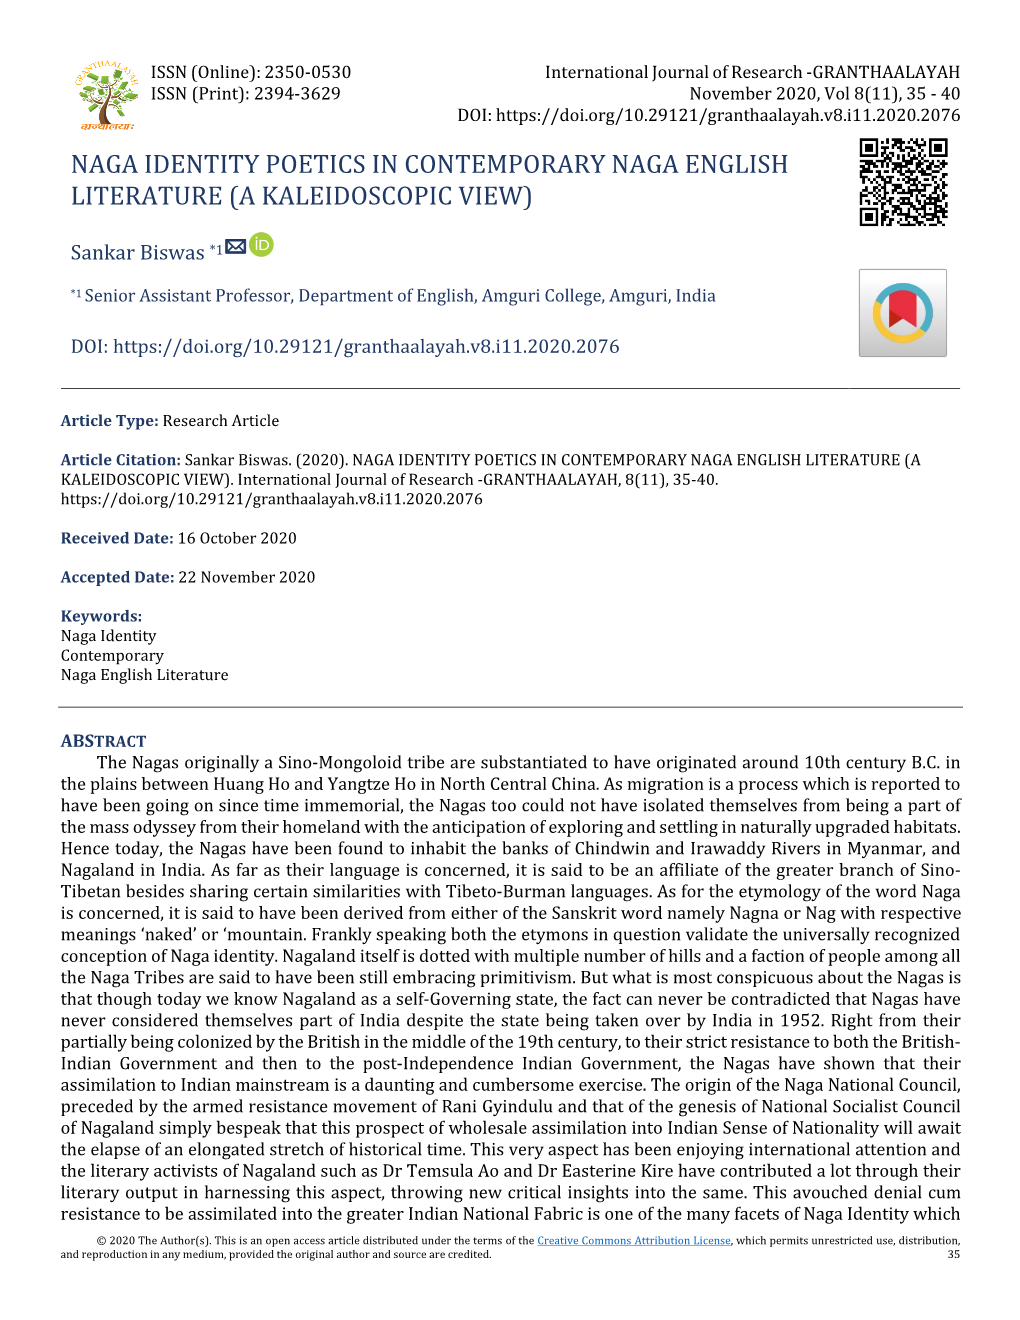 Naga Identity Poetics in Contemporary Naga English Literature (A Kaleidoscopic View)